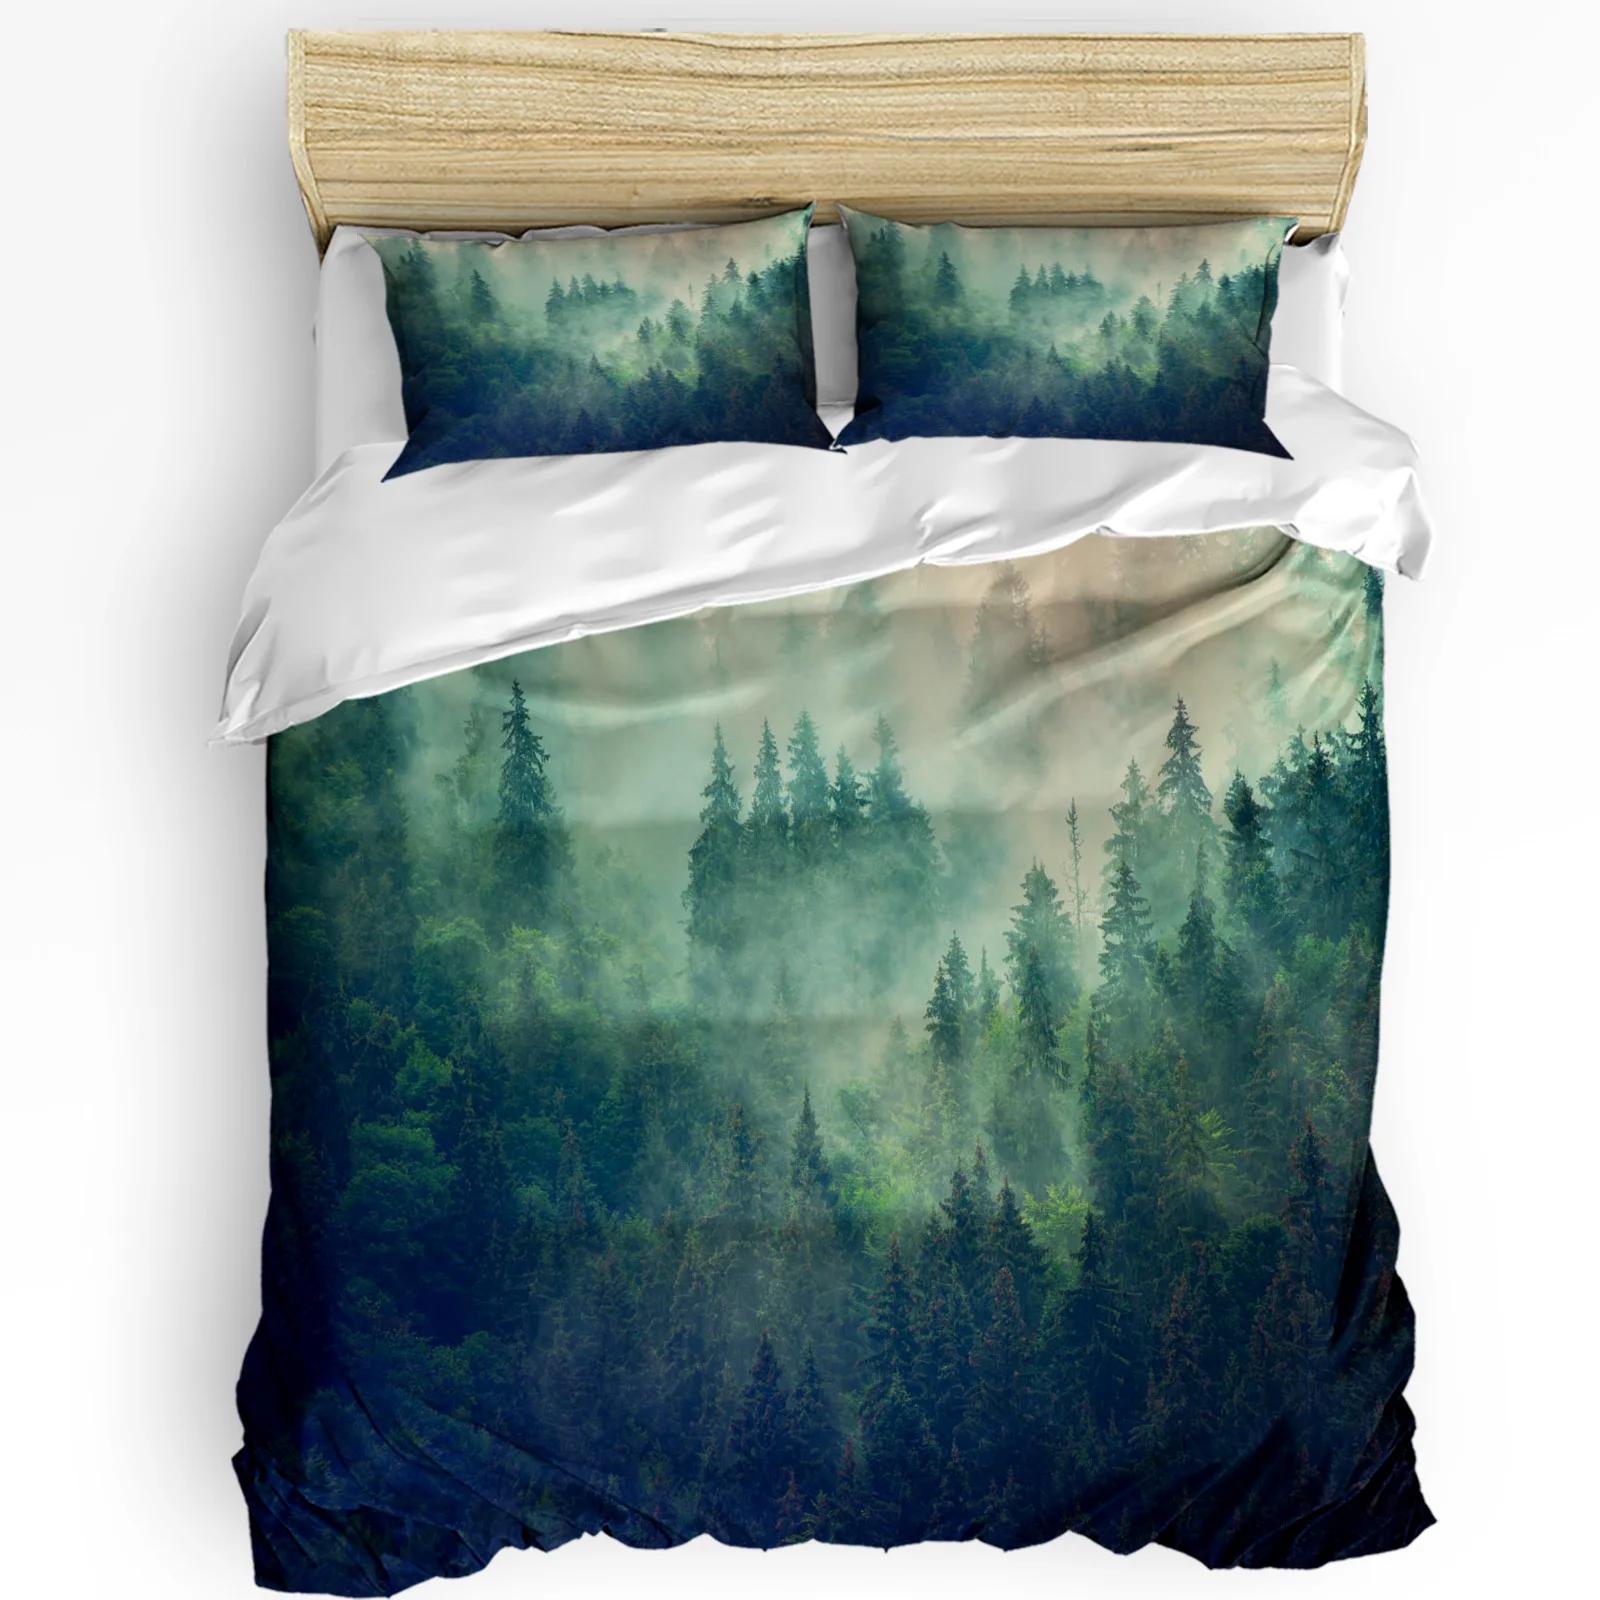 Misty Mountains Forest Bedding Set 3pcs Boys Girls Duvet Cover Pillowcase Kids Adult Quilt Cover Double Bed Set Home